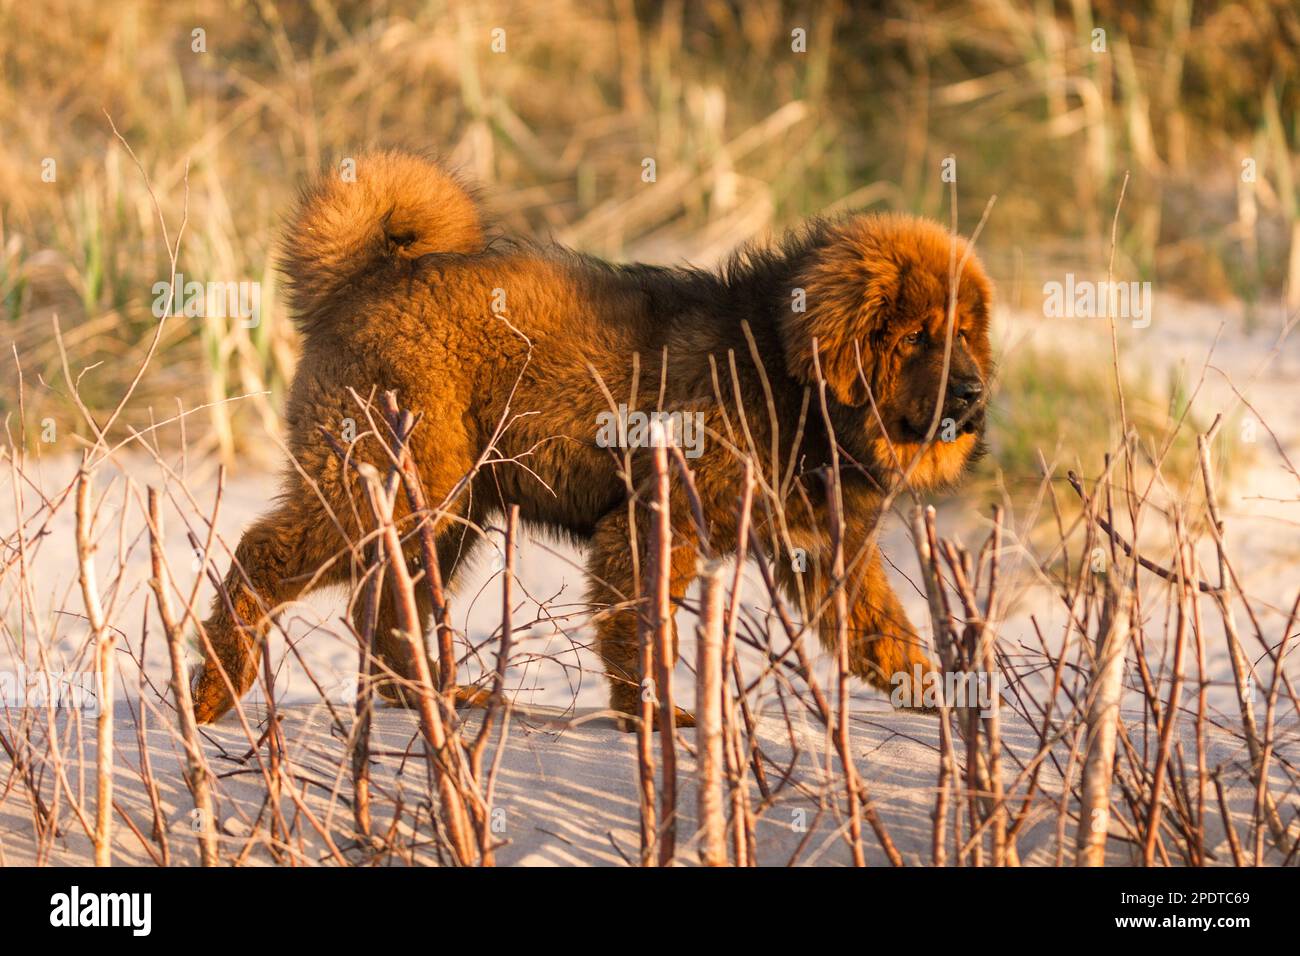 Red tibetan mastiff puppy on the beach. Stock Photo